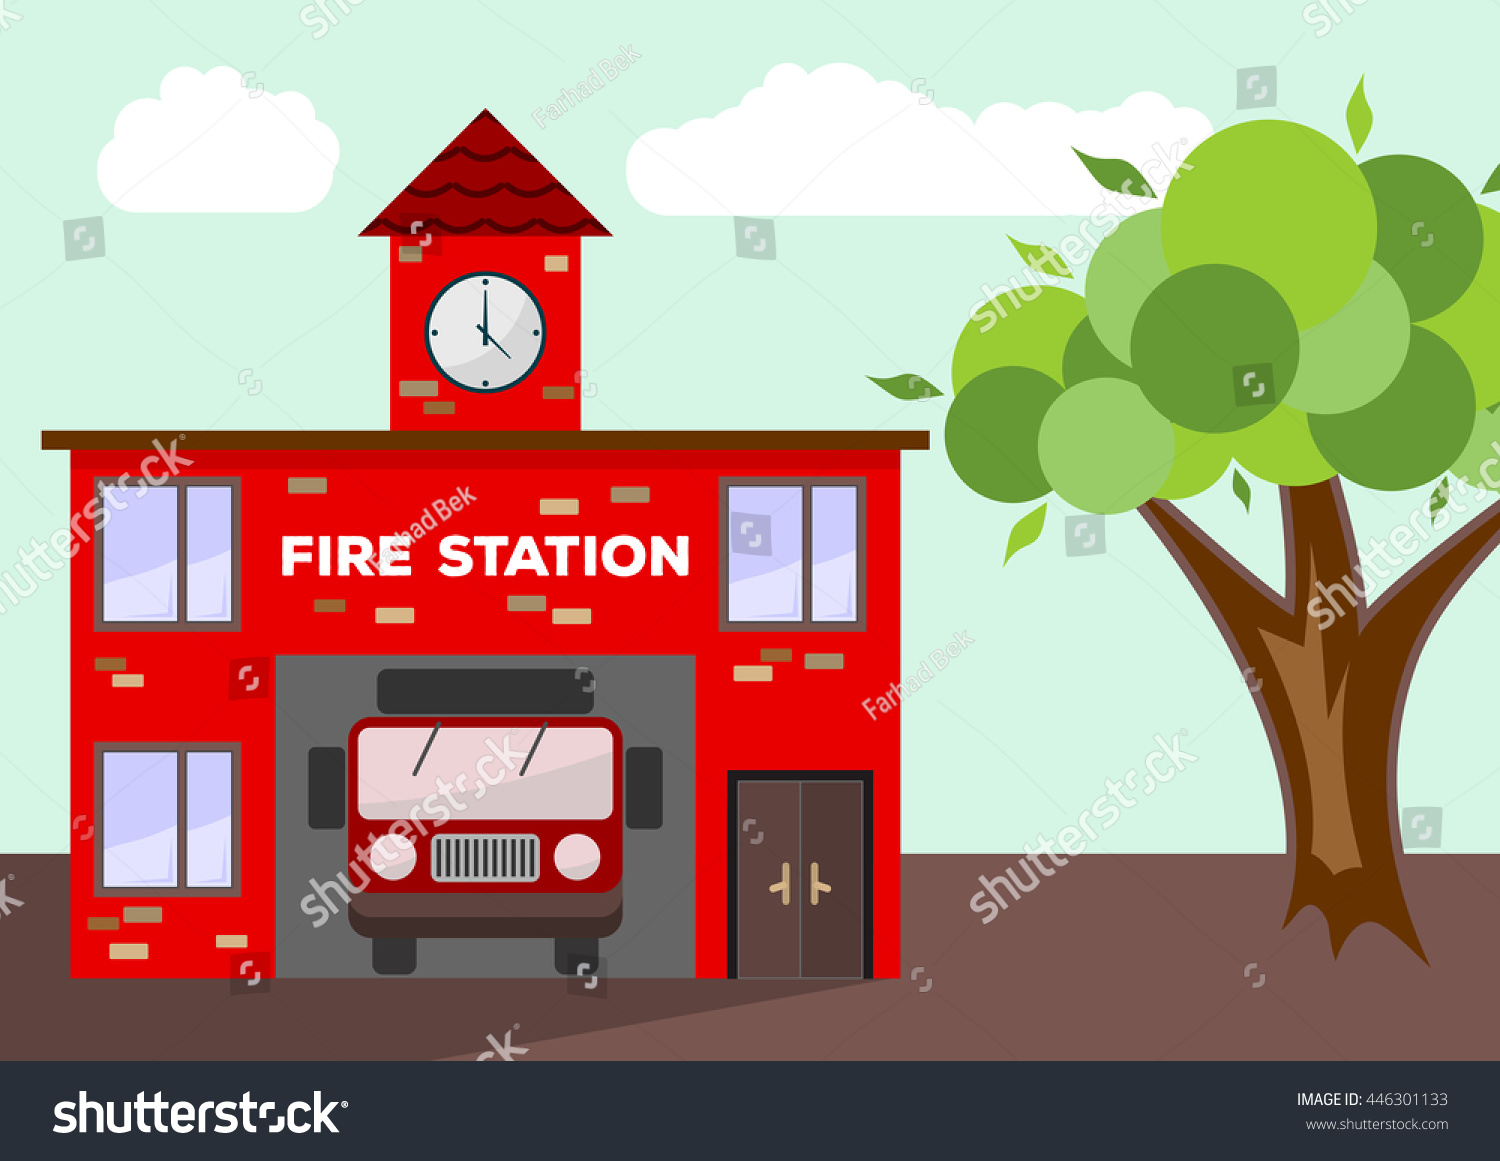 Fire Station cartoon